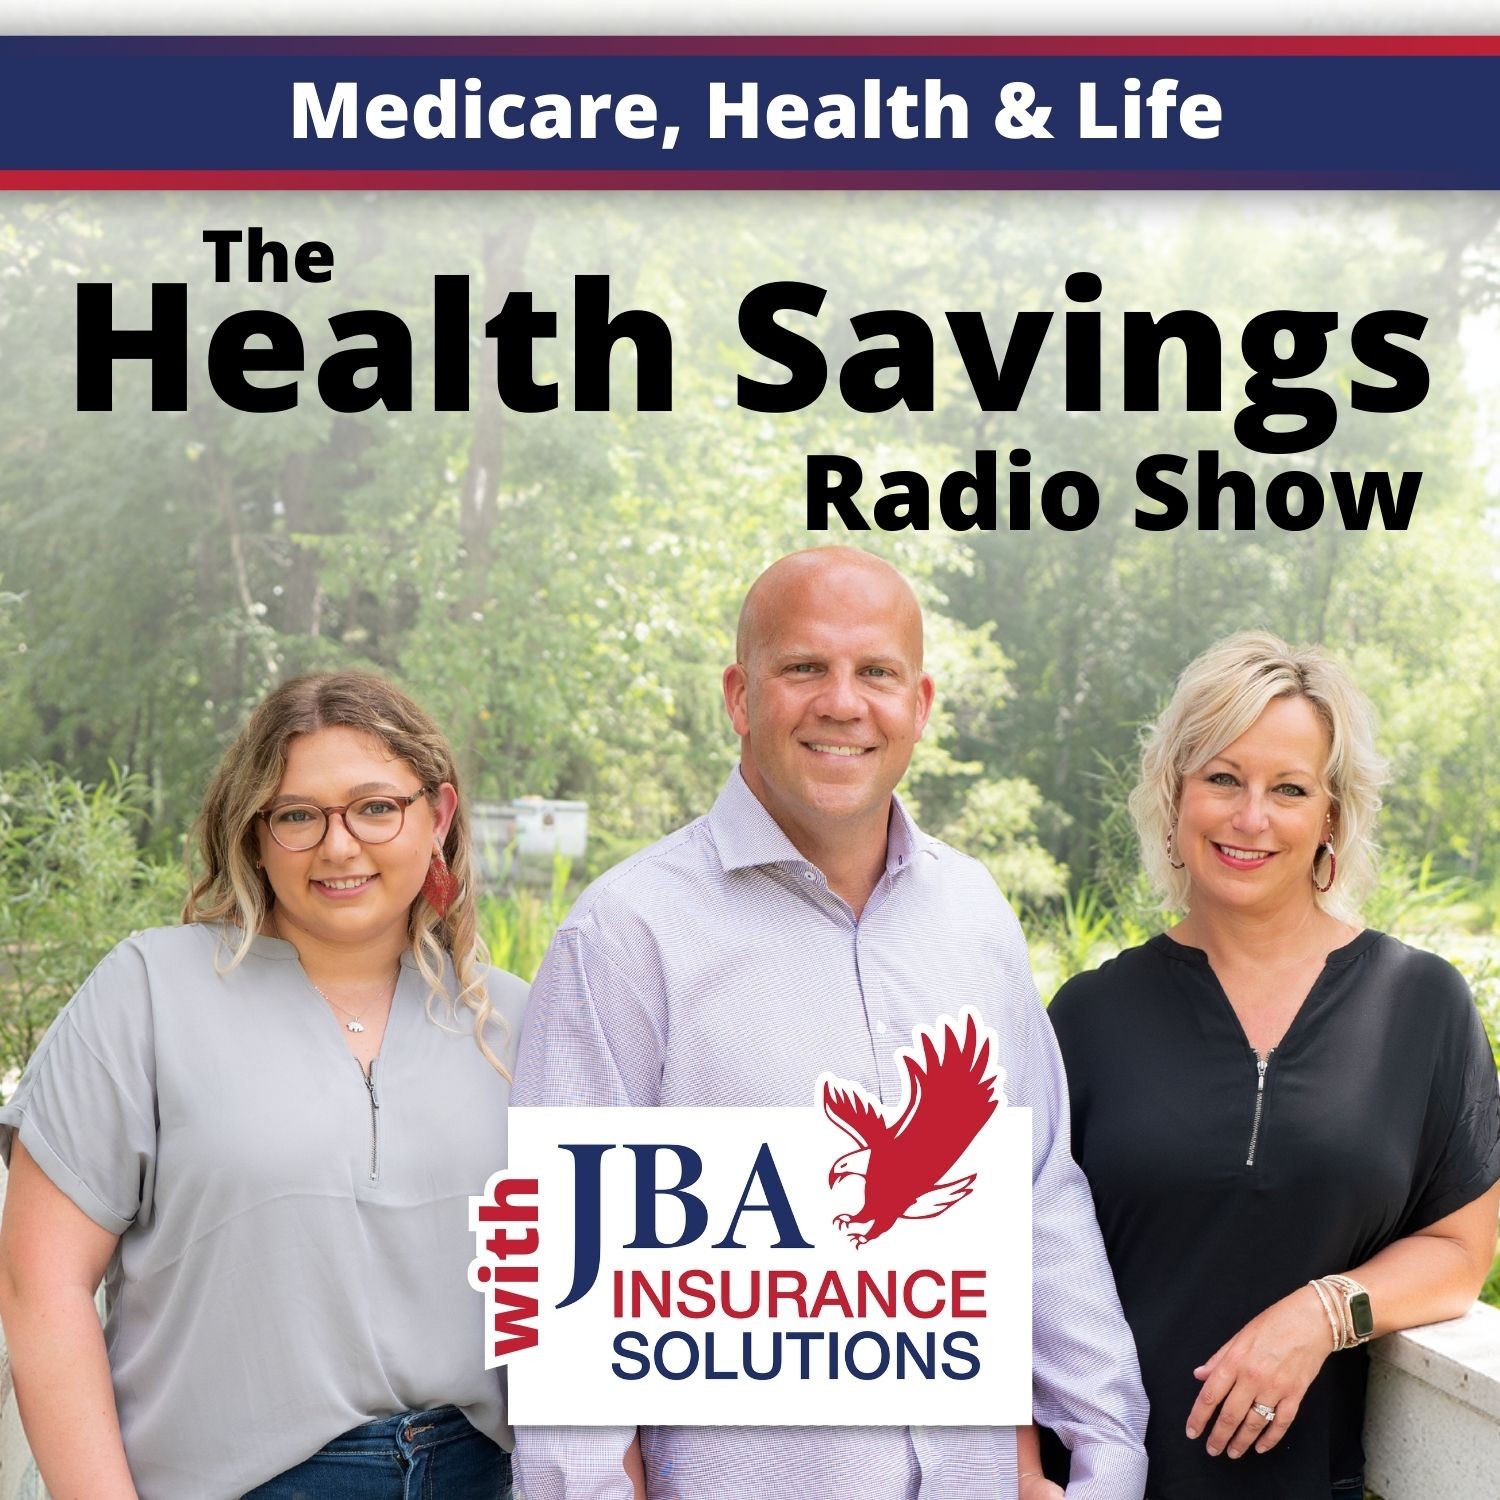 The Health Savings Radio Show